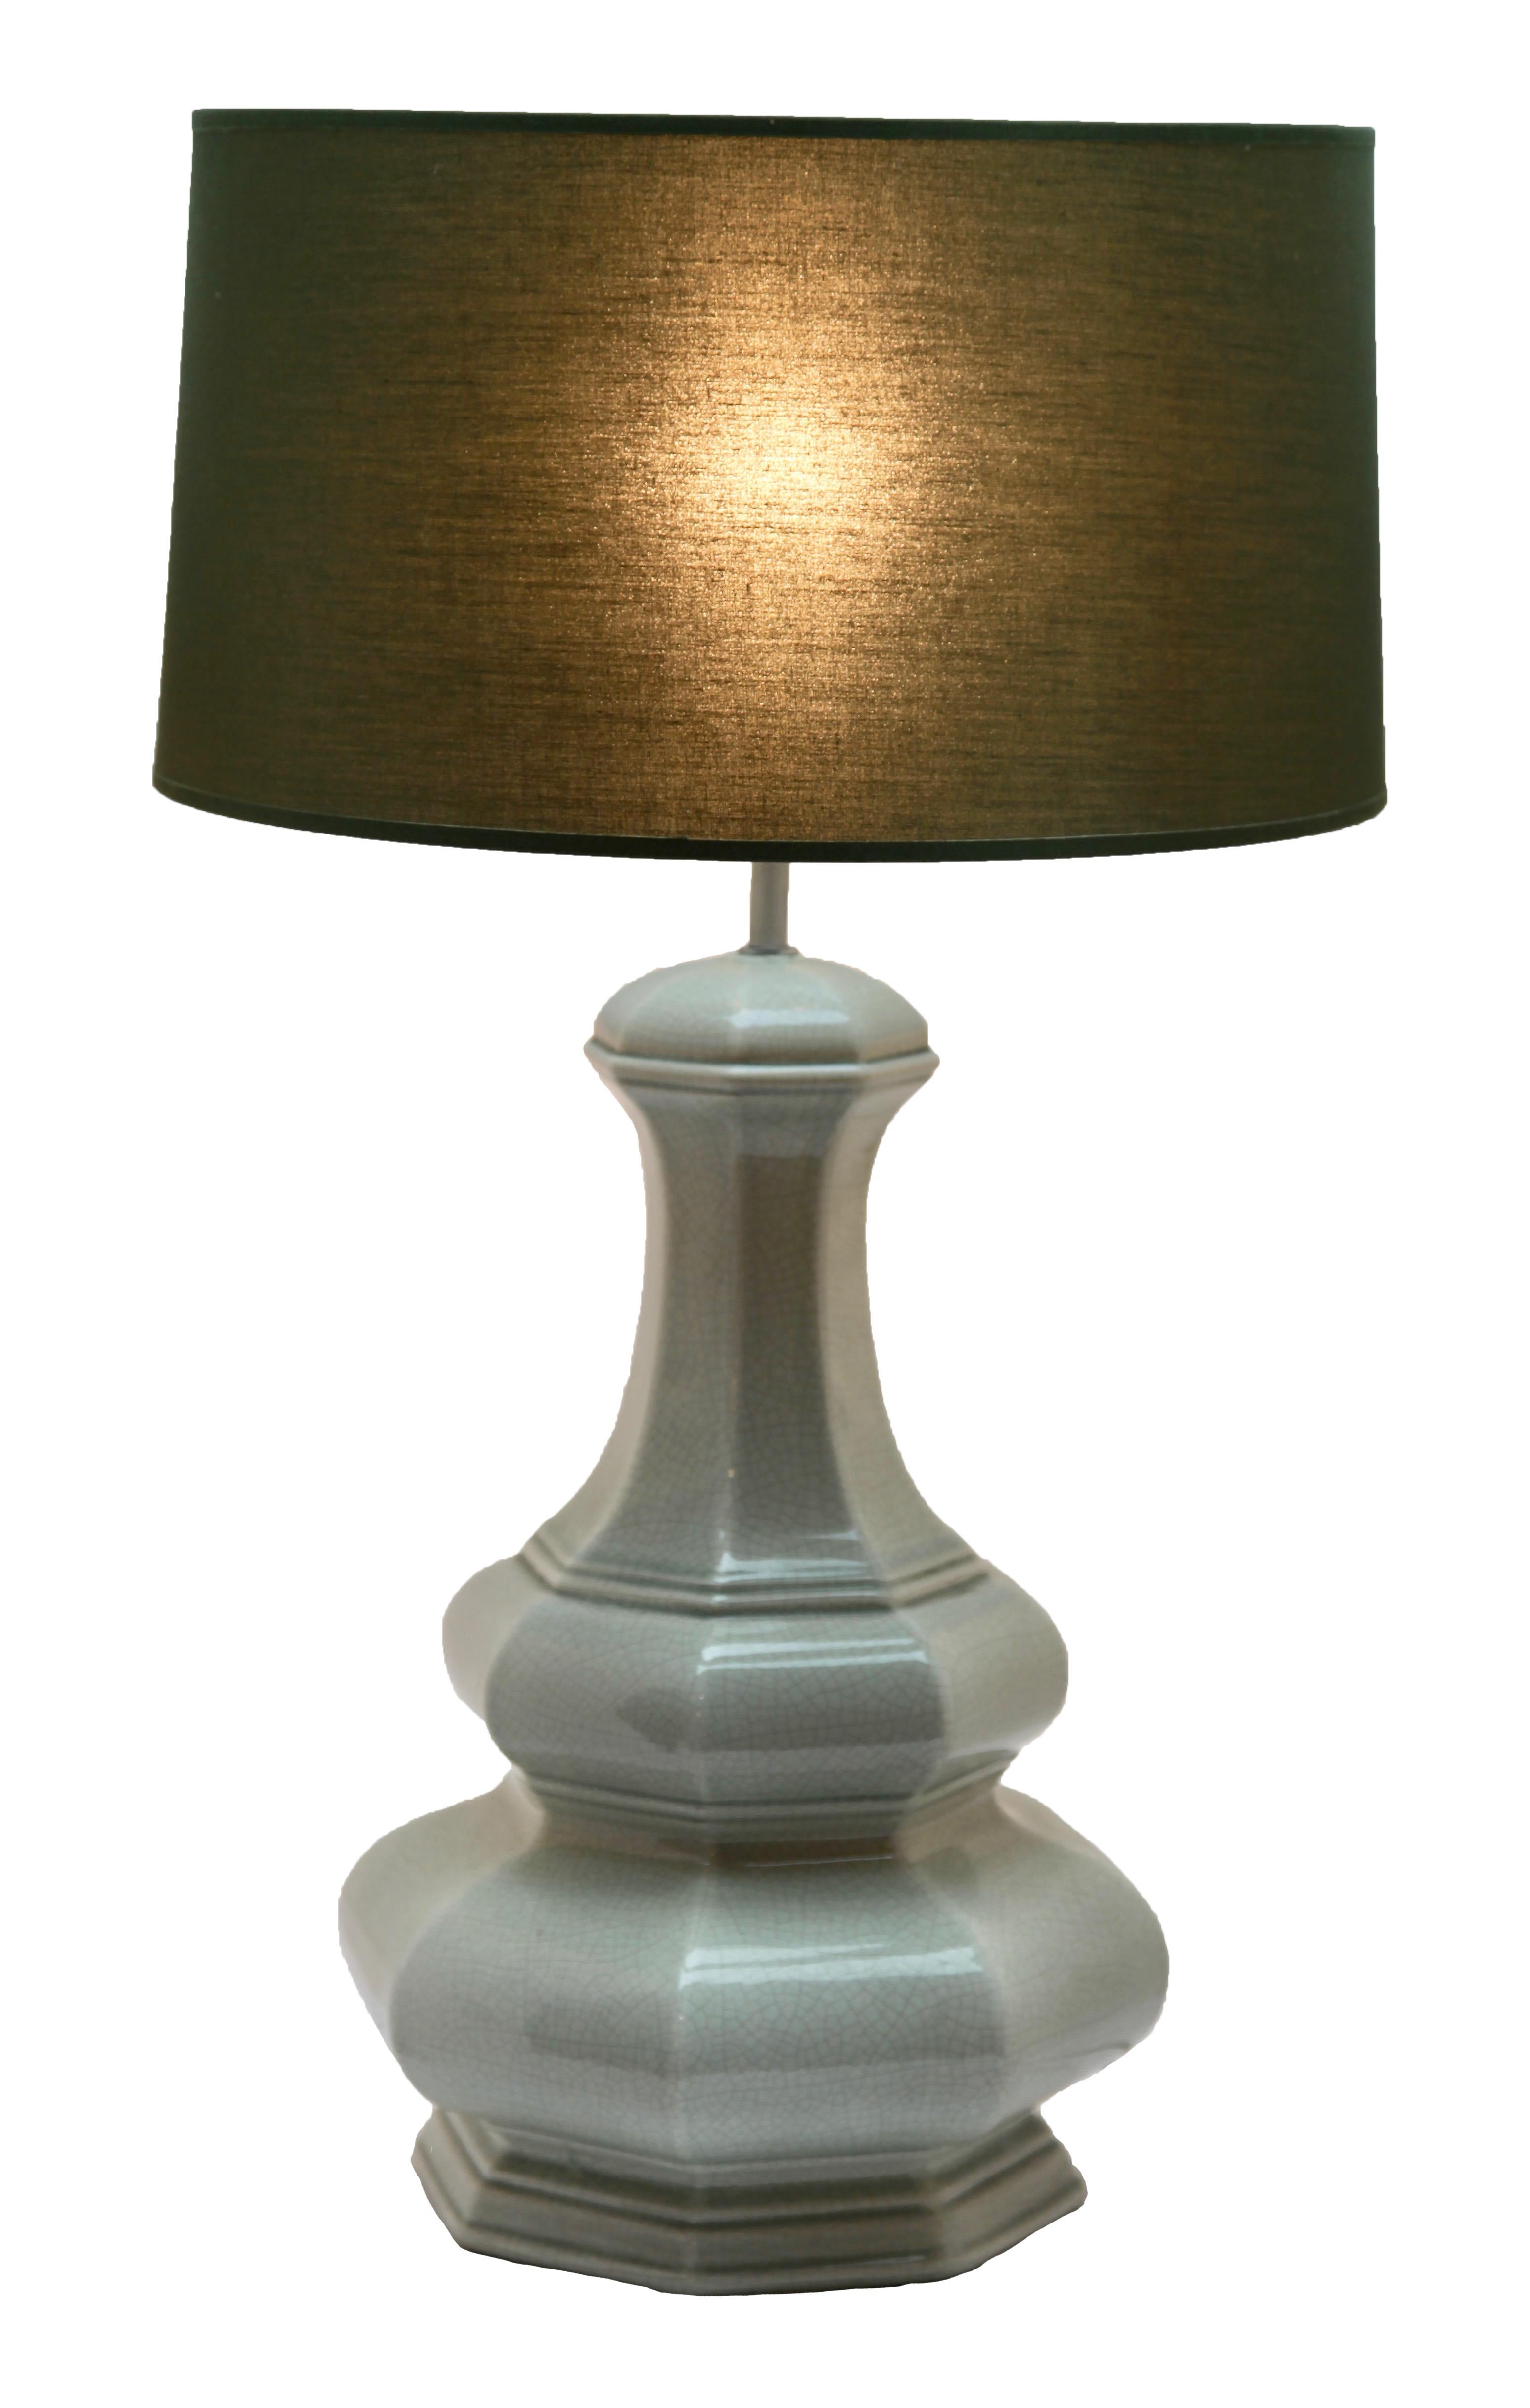 Art Deco Celadon Table Lamp, Palest Jade with Fine Craquelure Glaze